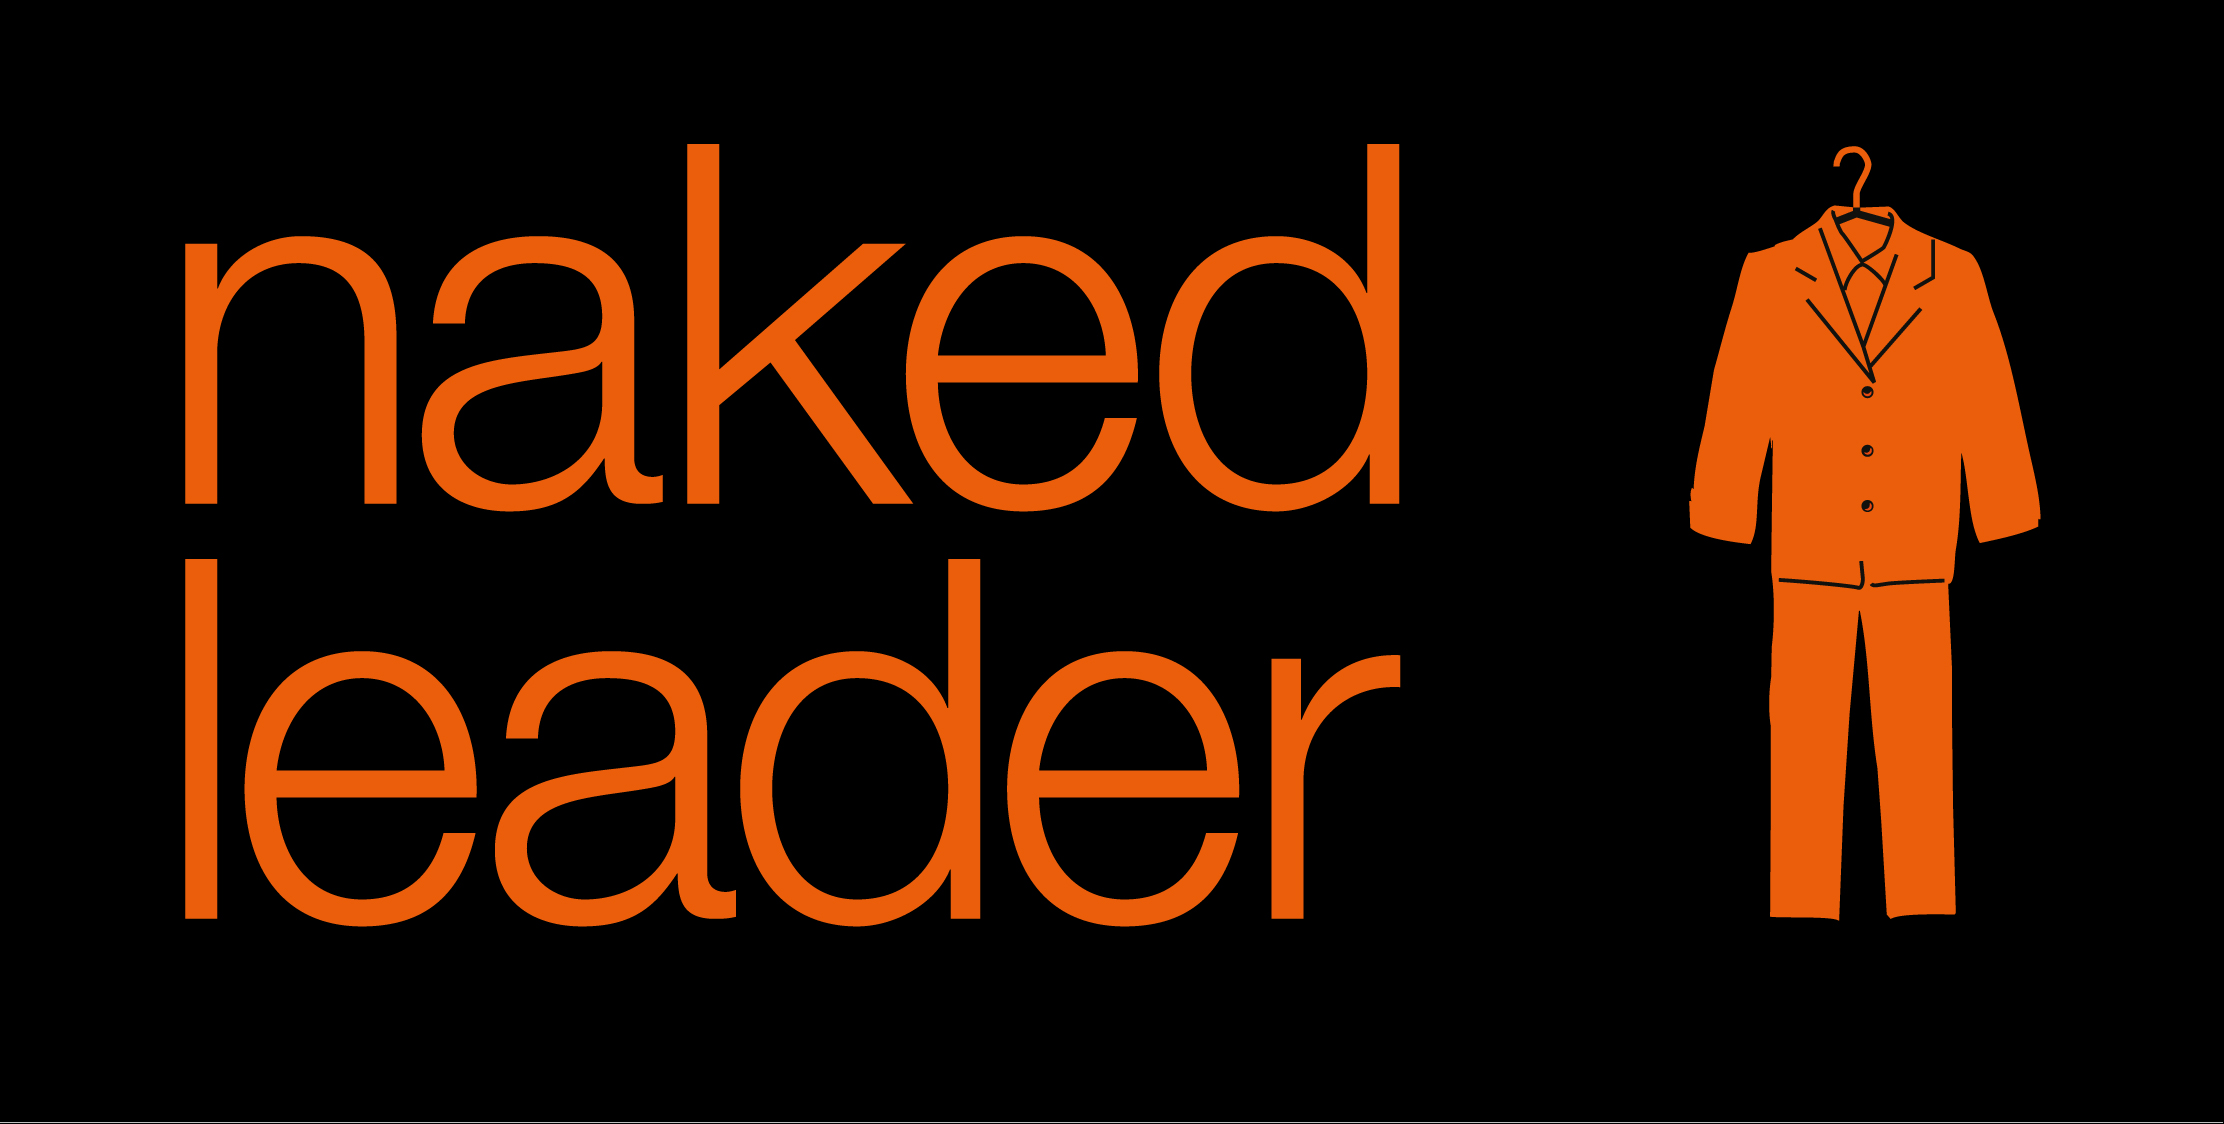 The Naked Leader